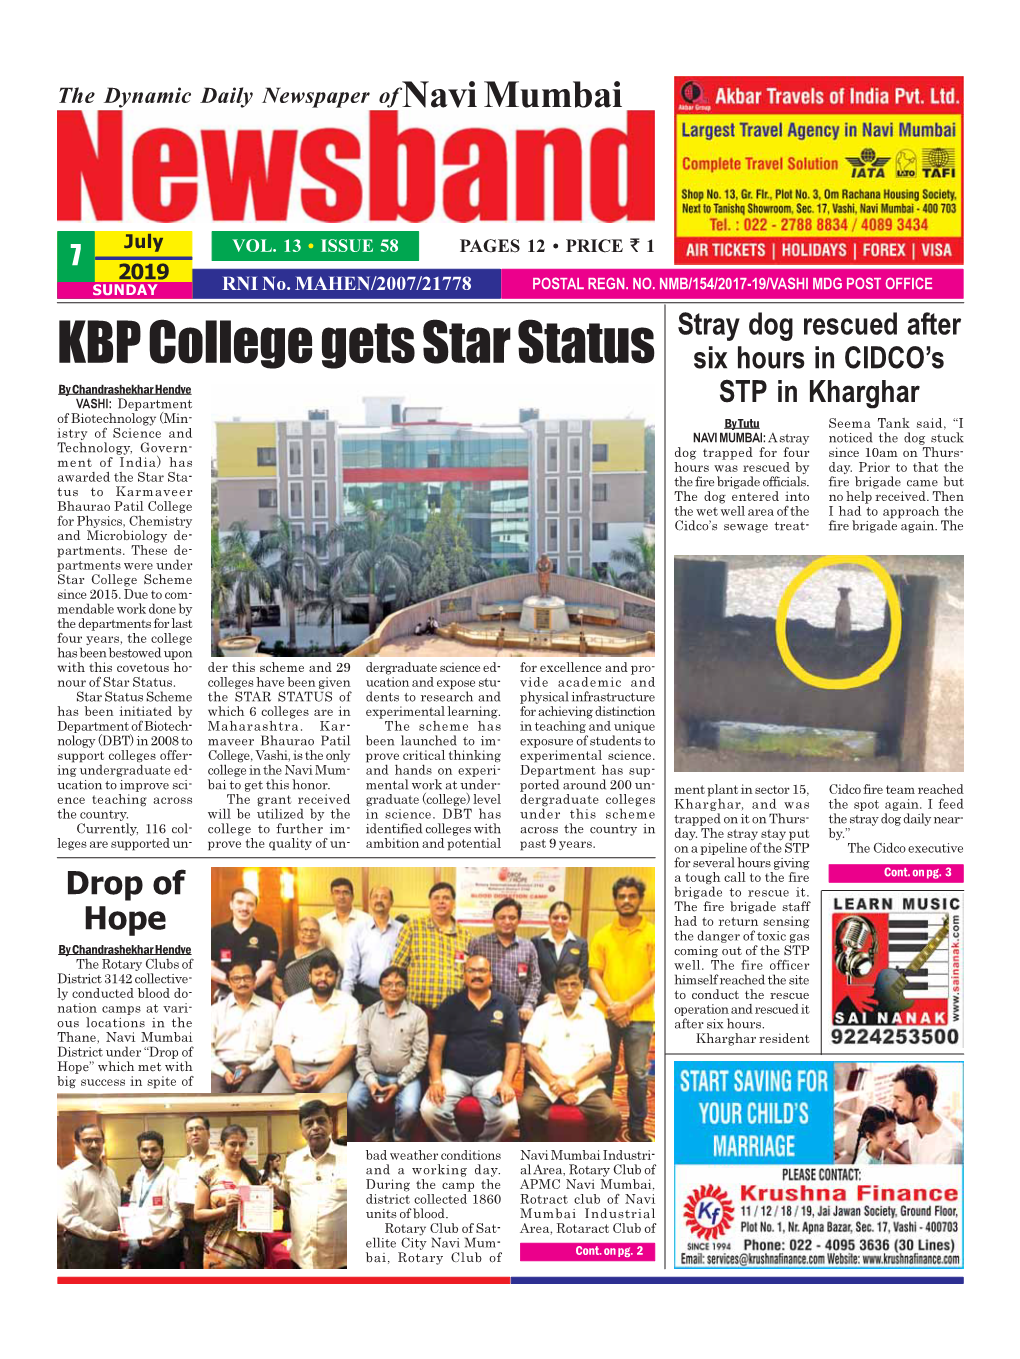 KBP College Gets Star Status